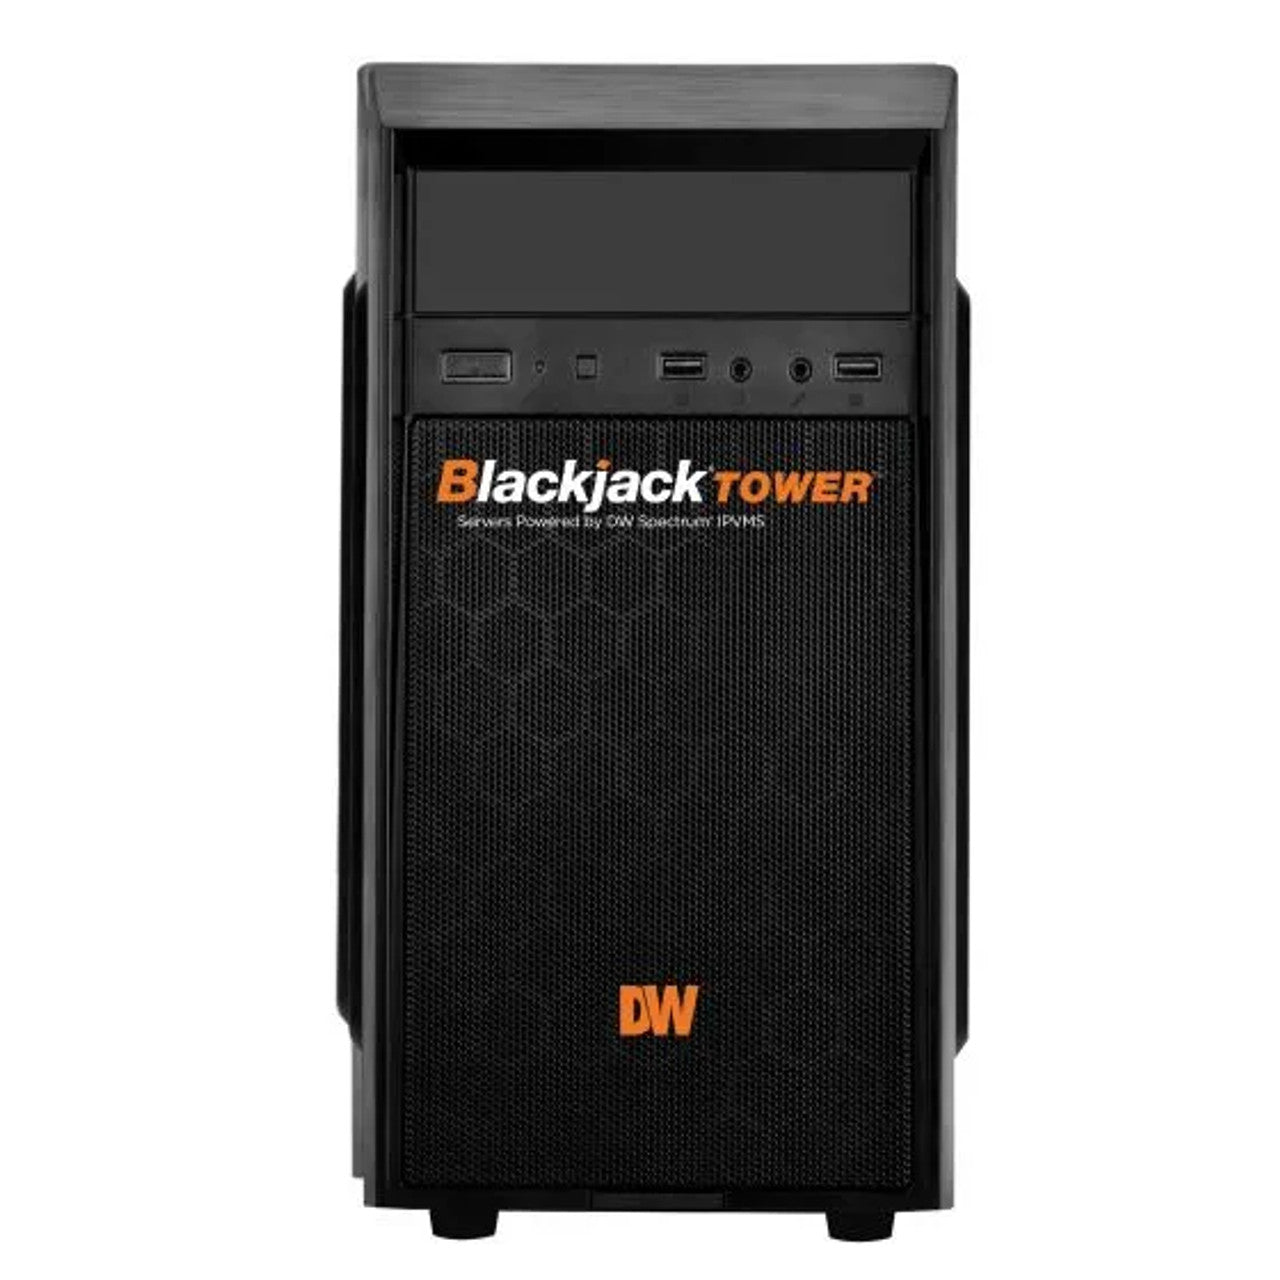 Digital Watchdog DW-BJMTC7404T Blackjack Series Tower Workstation